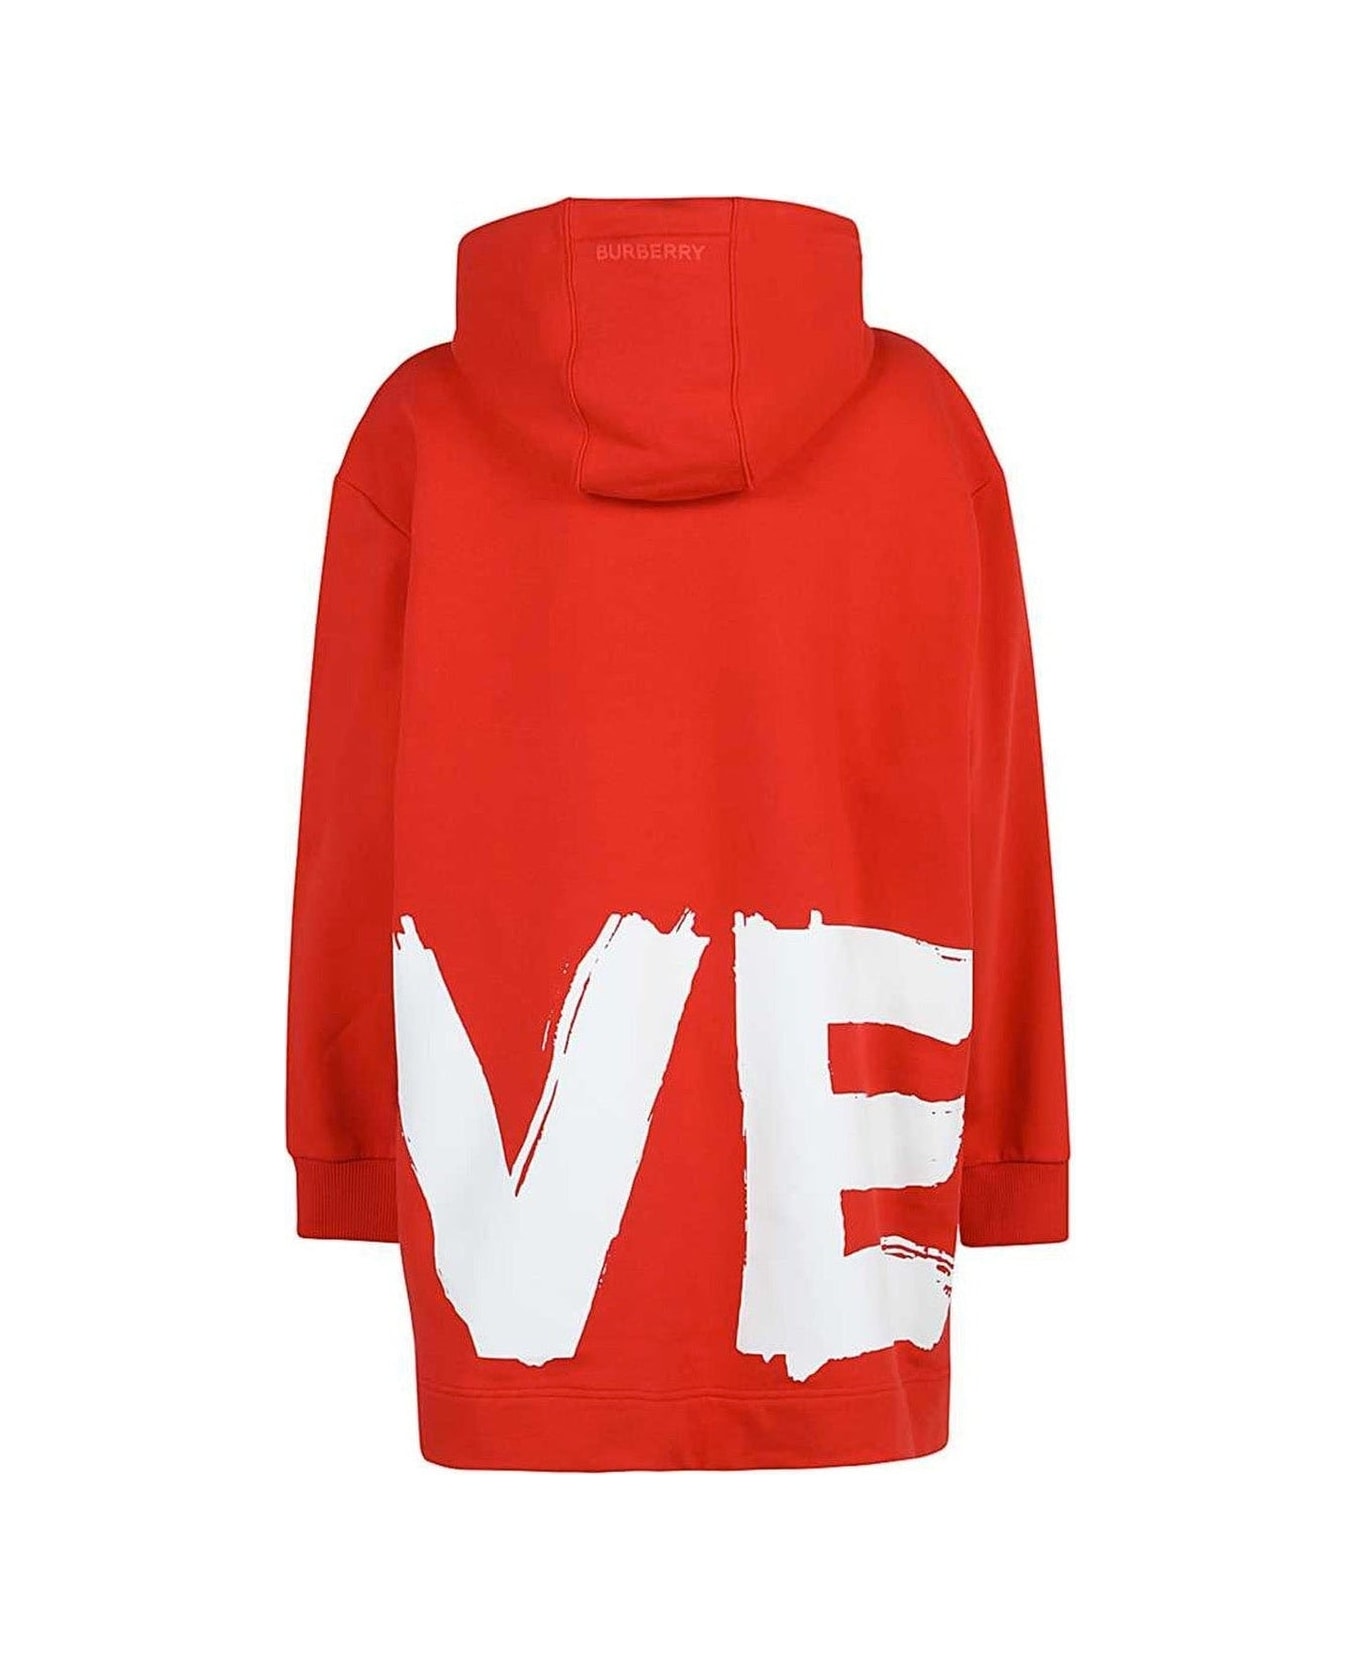 Burberry Aurore Love Hooded Sweatshirt - Red フリース